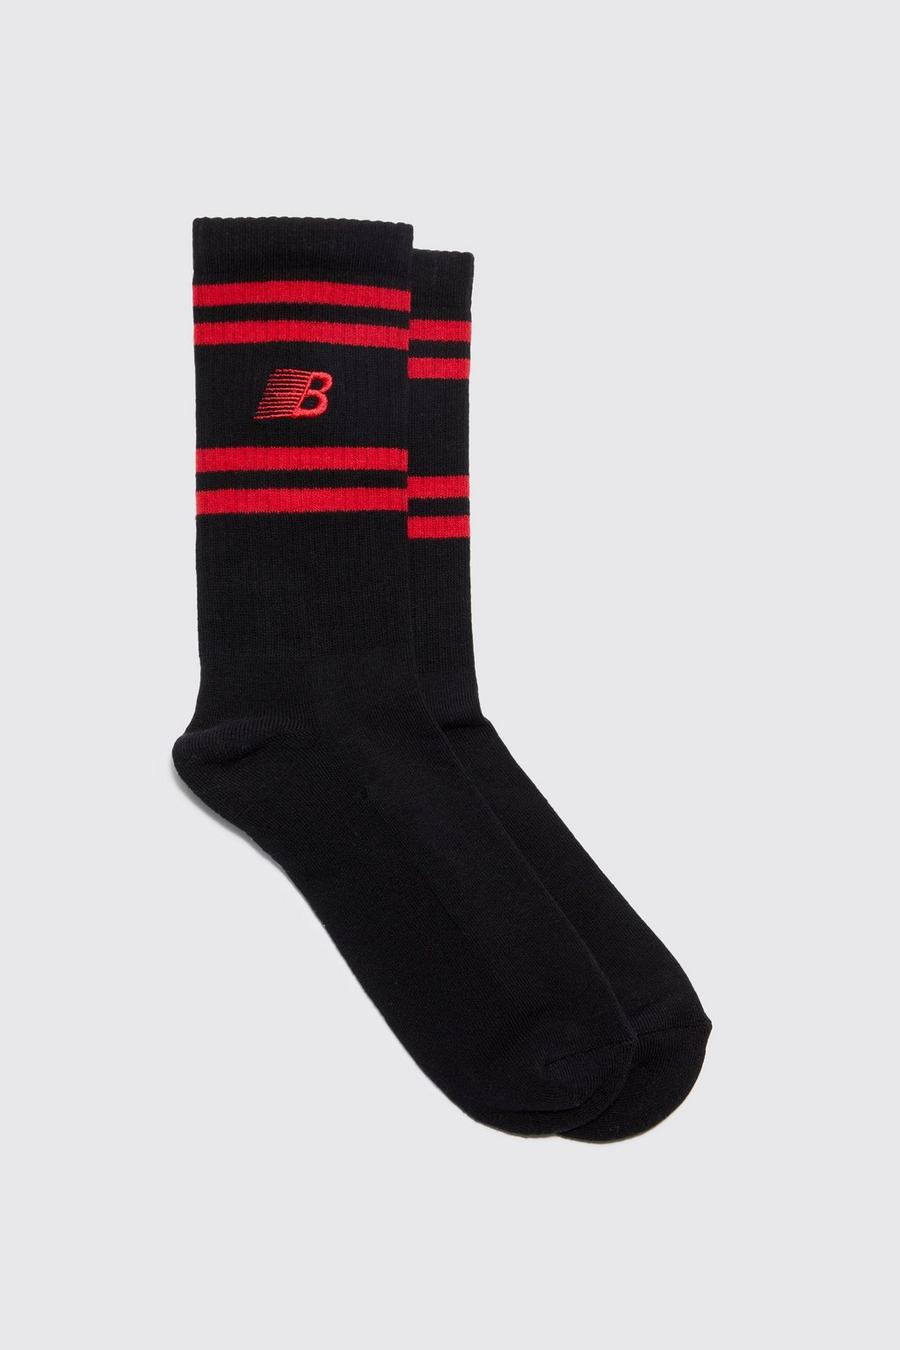 Black Embroidered B Stripe Socks image number 1